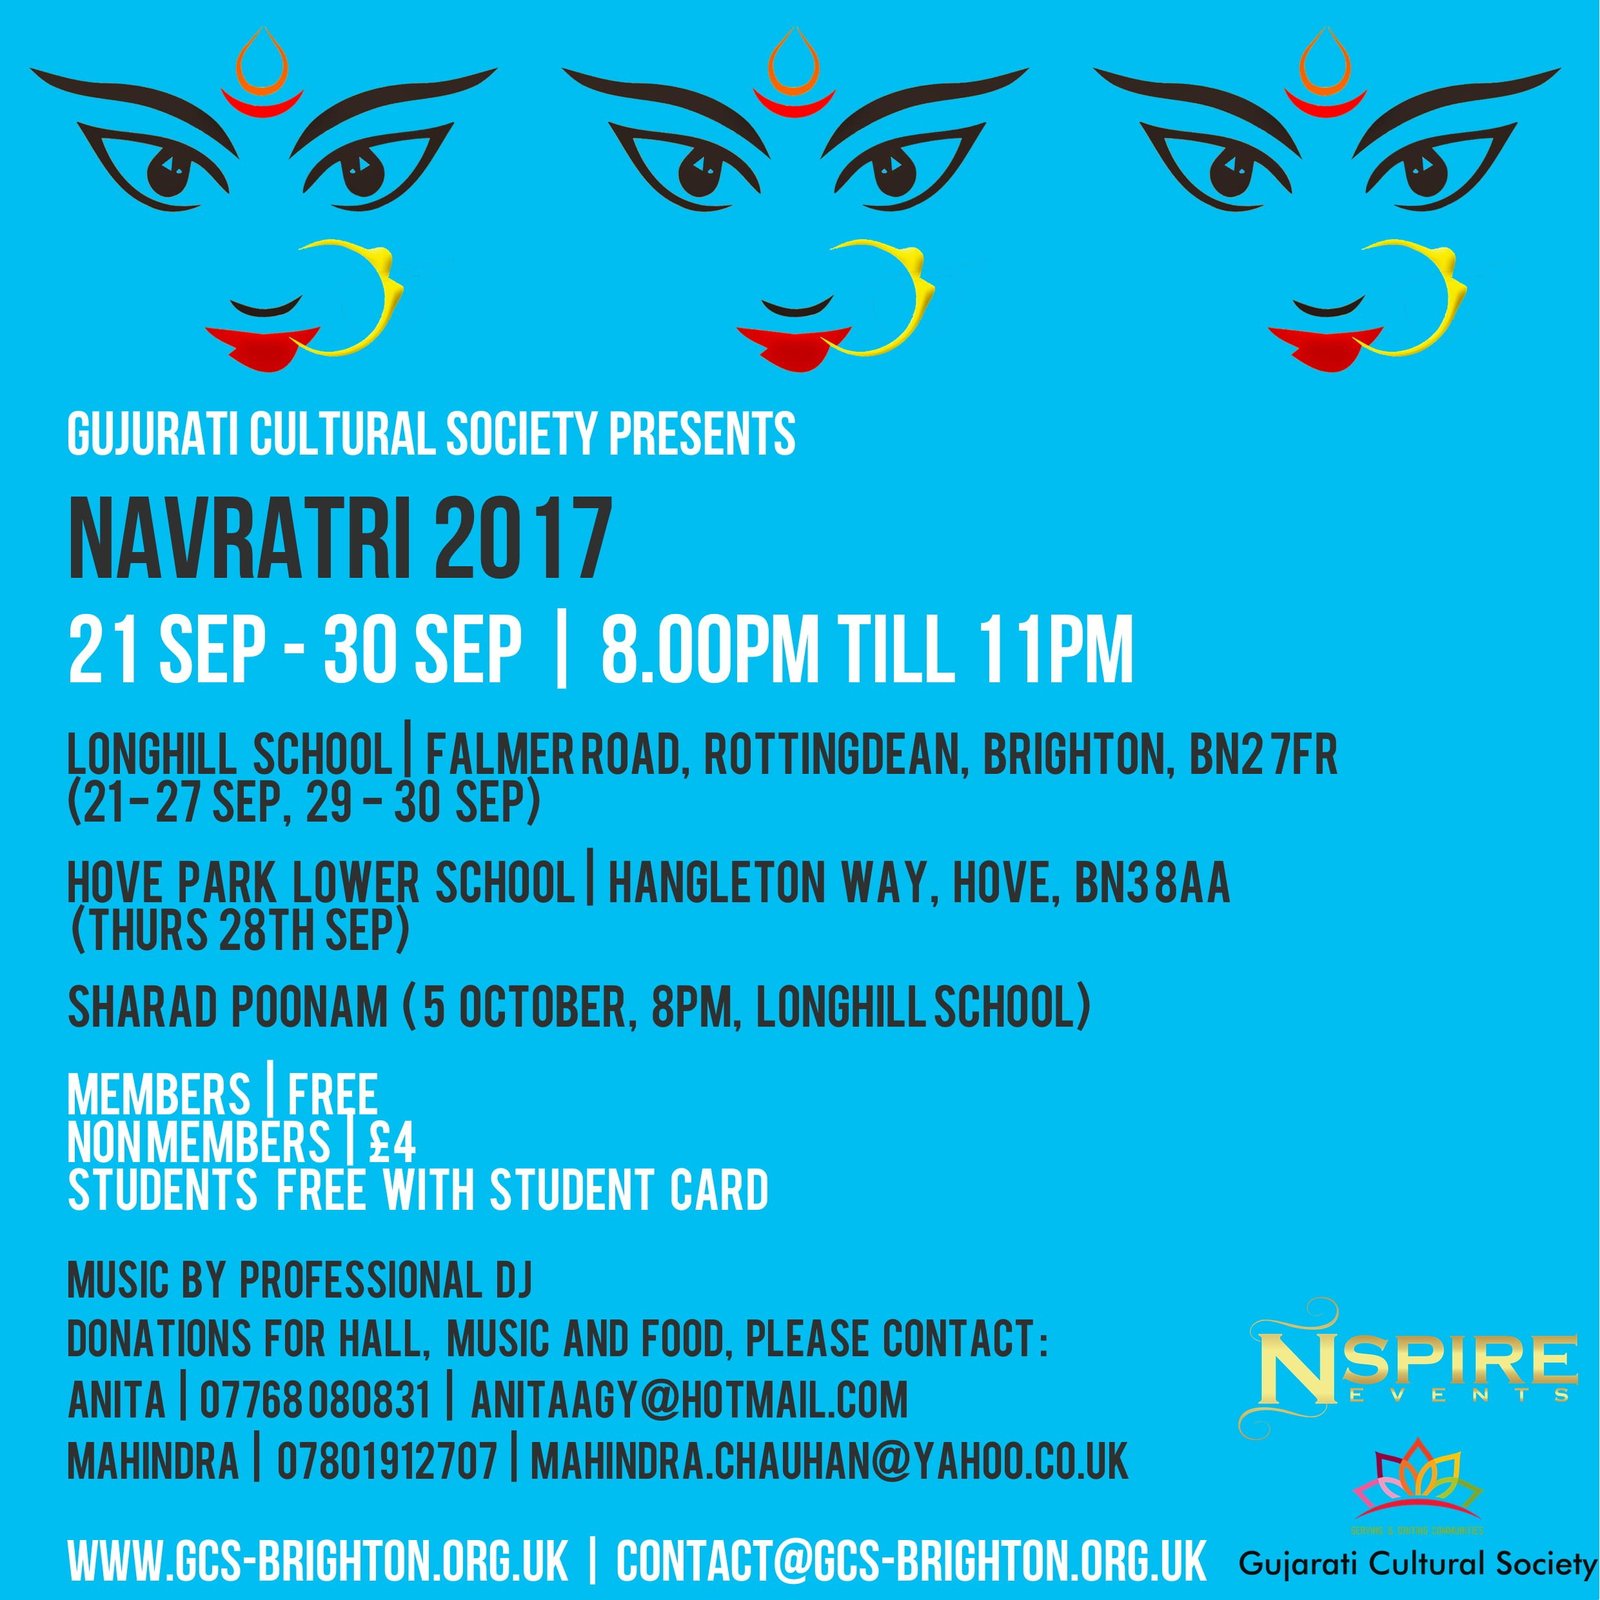 Details of Navratri 2017